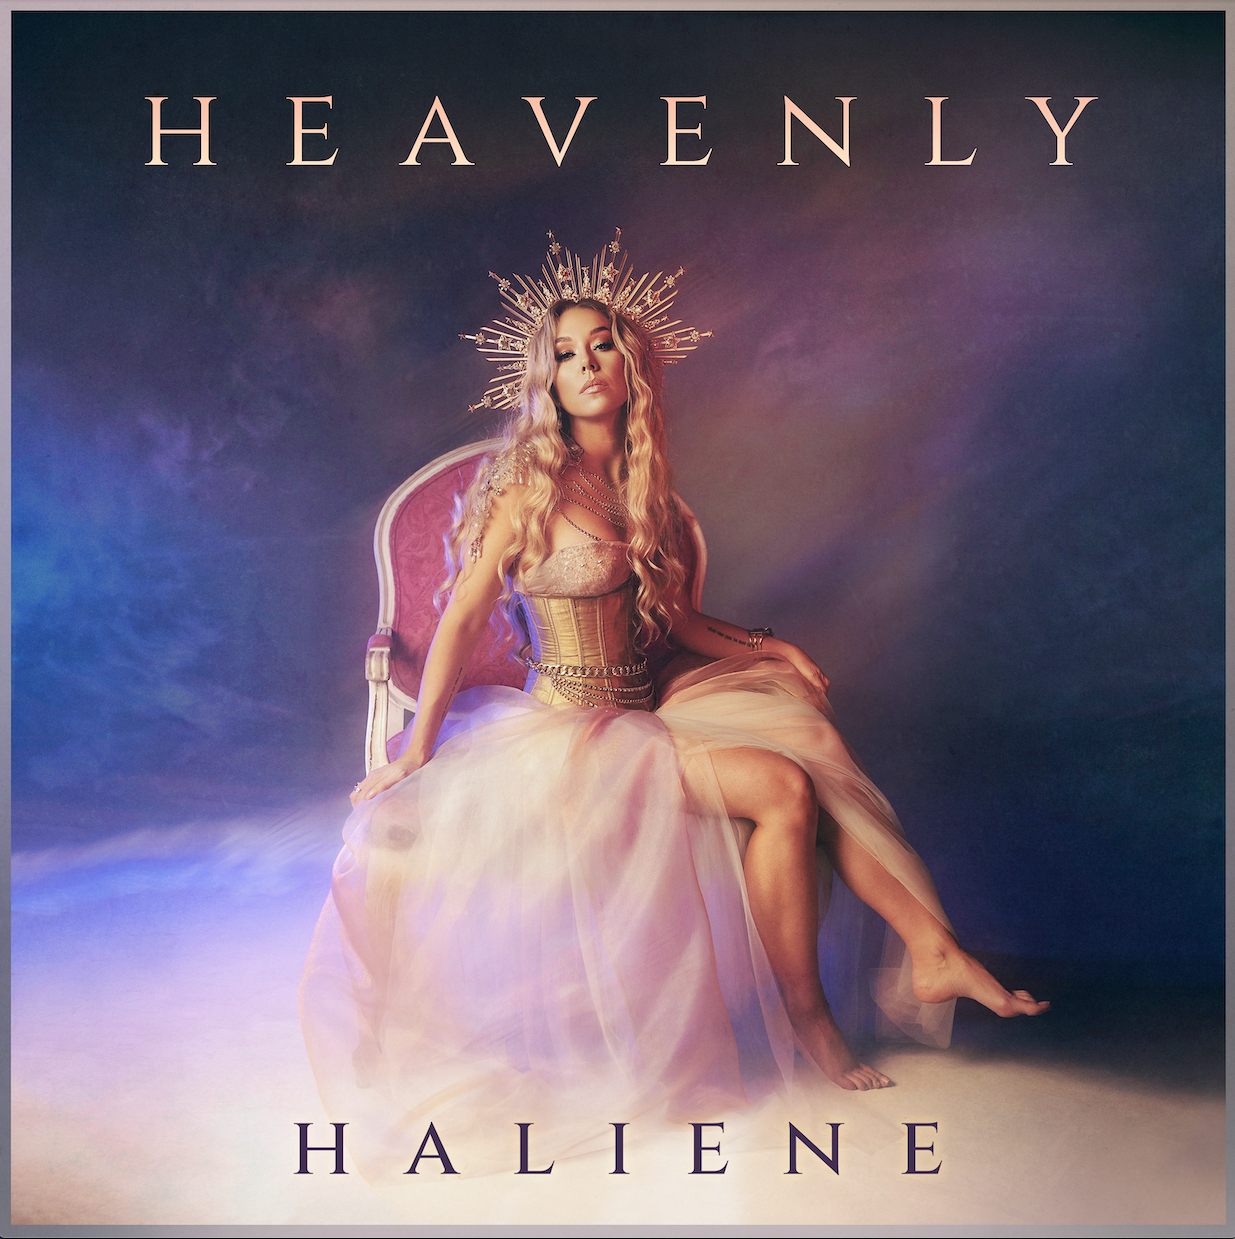 HALIENE presents HEAVENLY on Black Hole Recordings